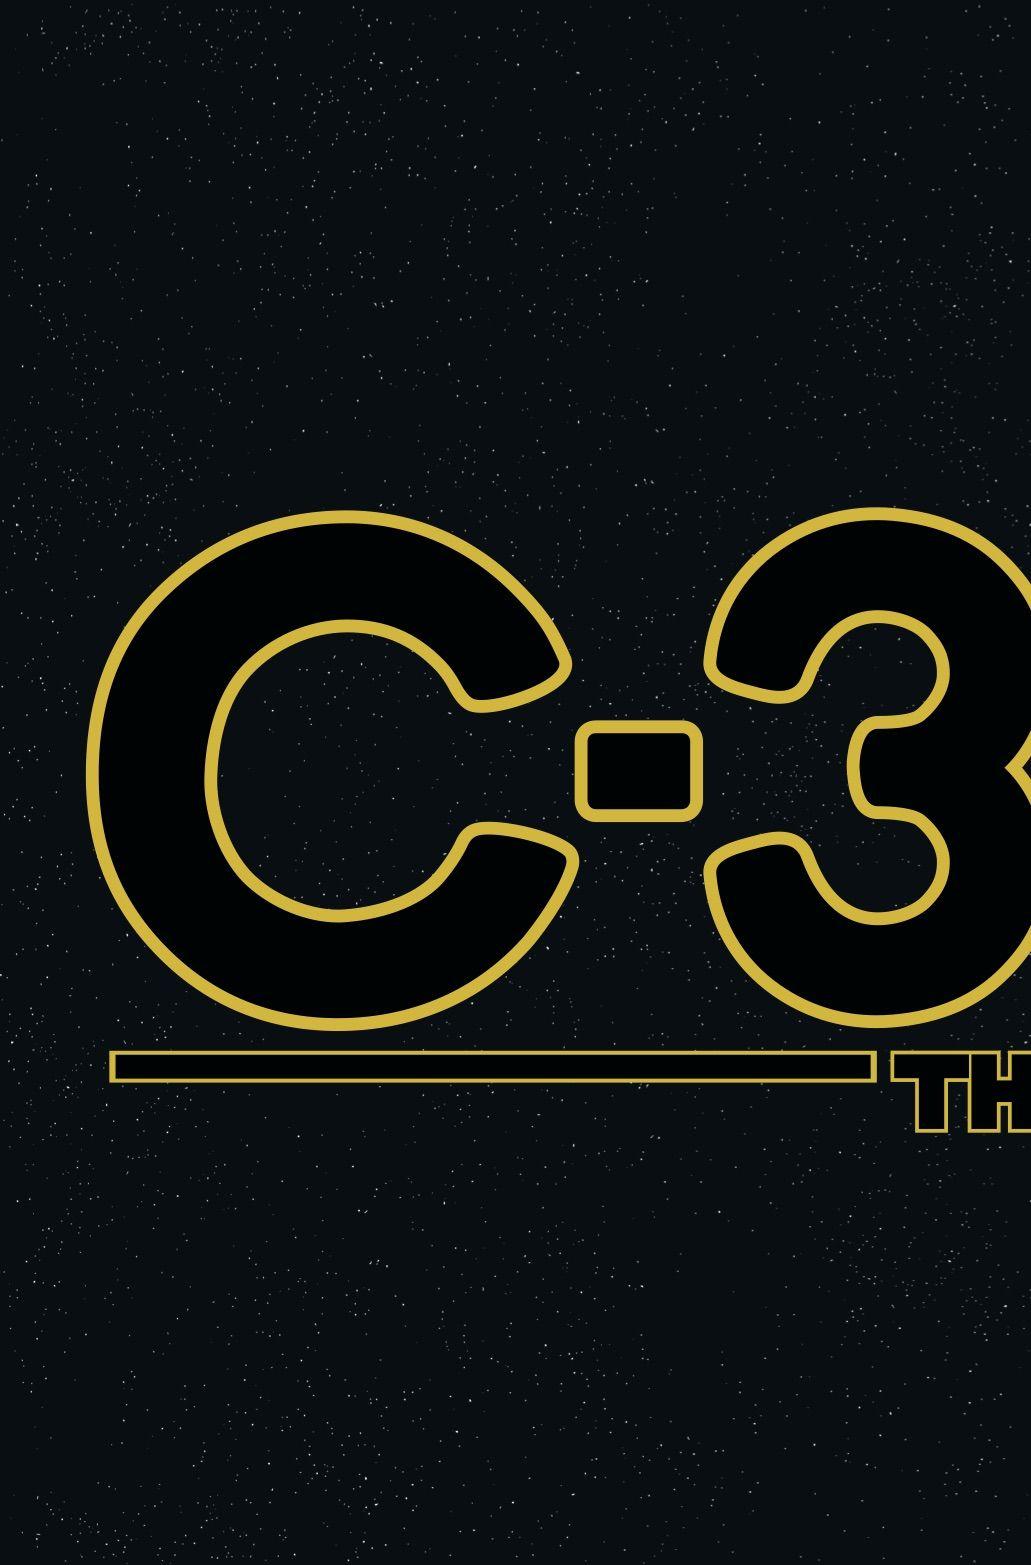 C-3PO Logo - Star Wars Special: C-3PO #1 - Exclusive Preview! | StarWars.com